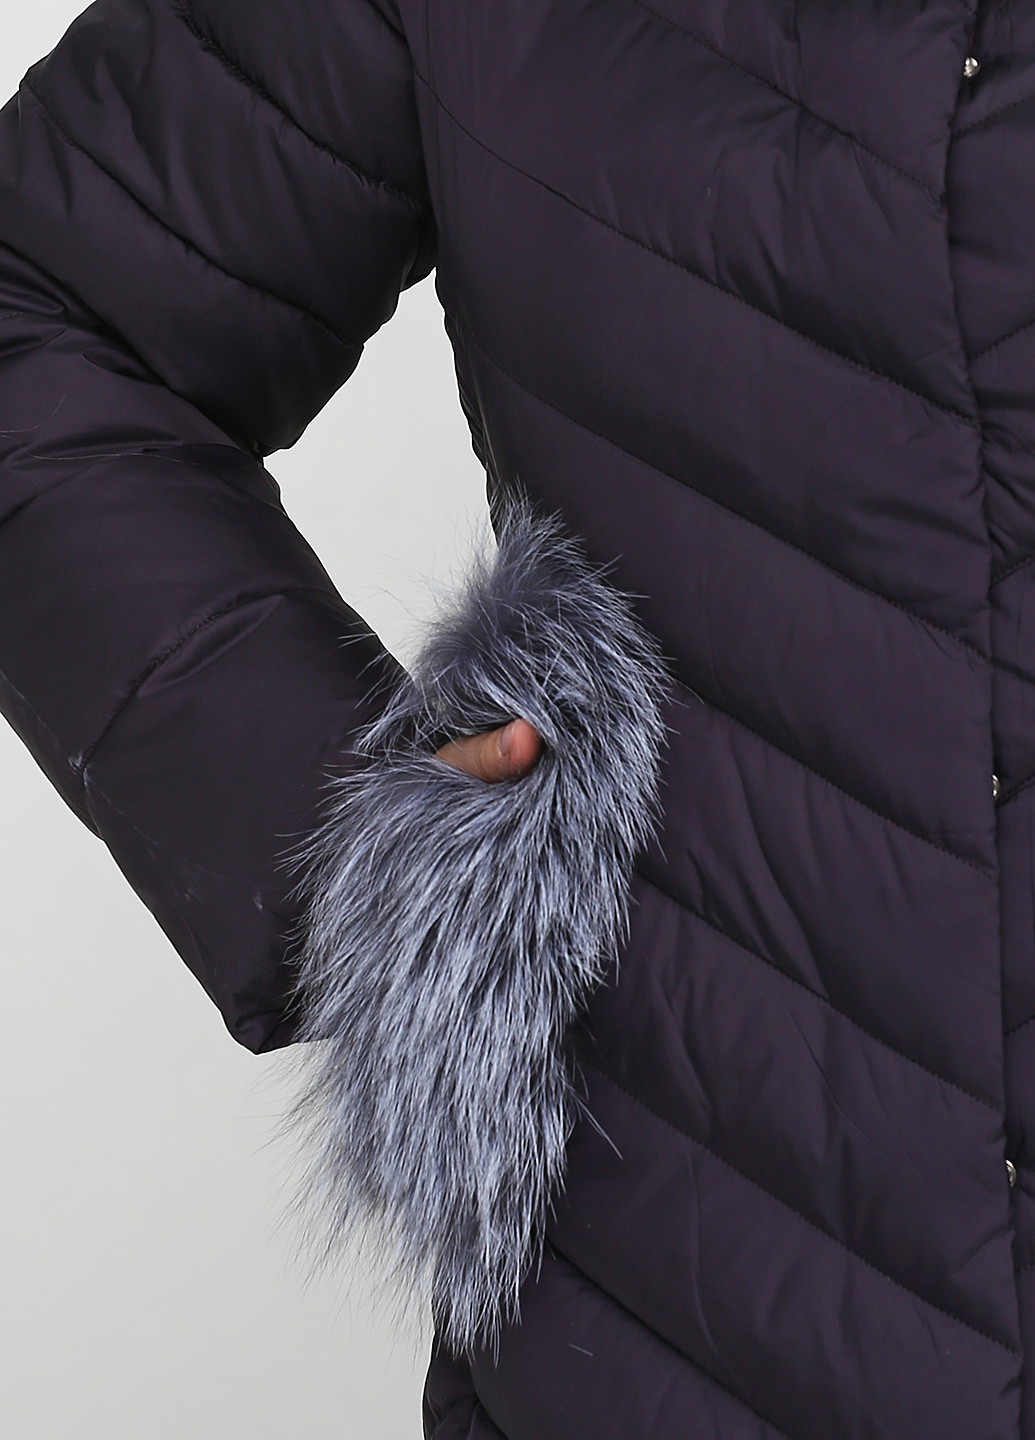 Темно-фиолетовая зимняя куртка Svidni